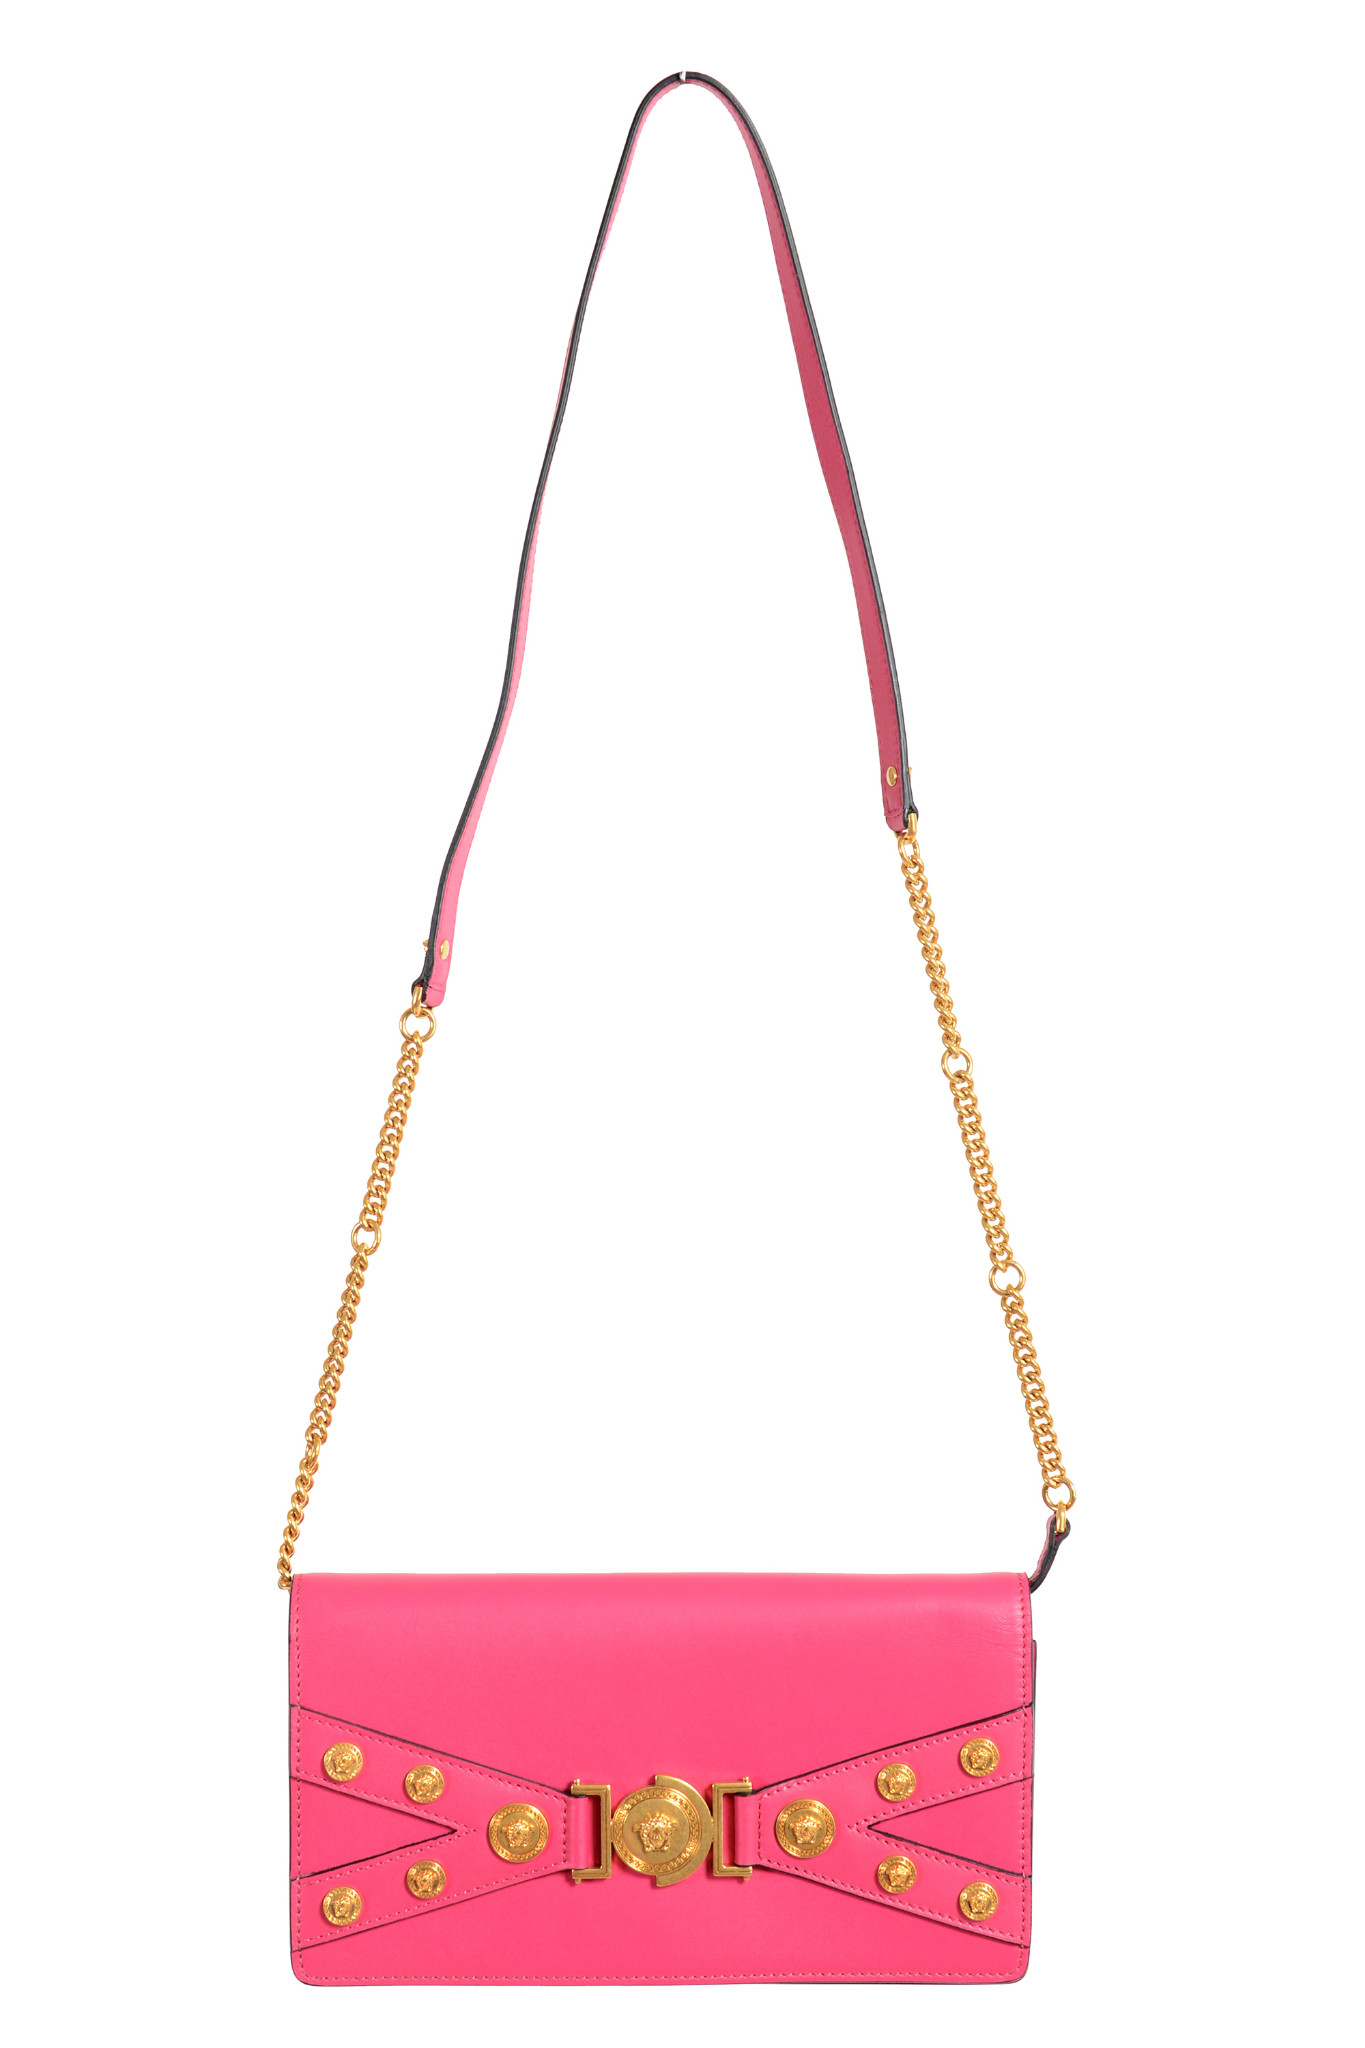 Versace Women's Tribute Pink Leather Clutch Shoulder Bag | eBay